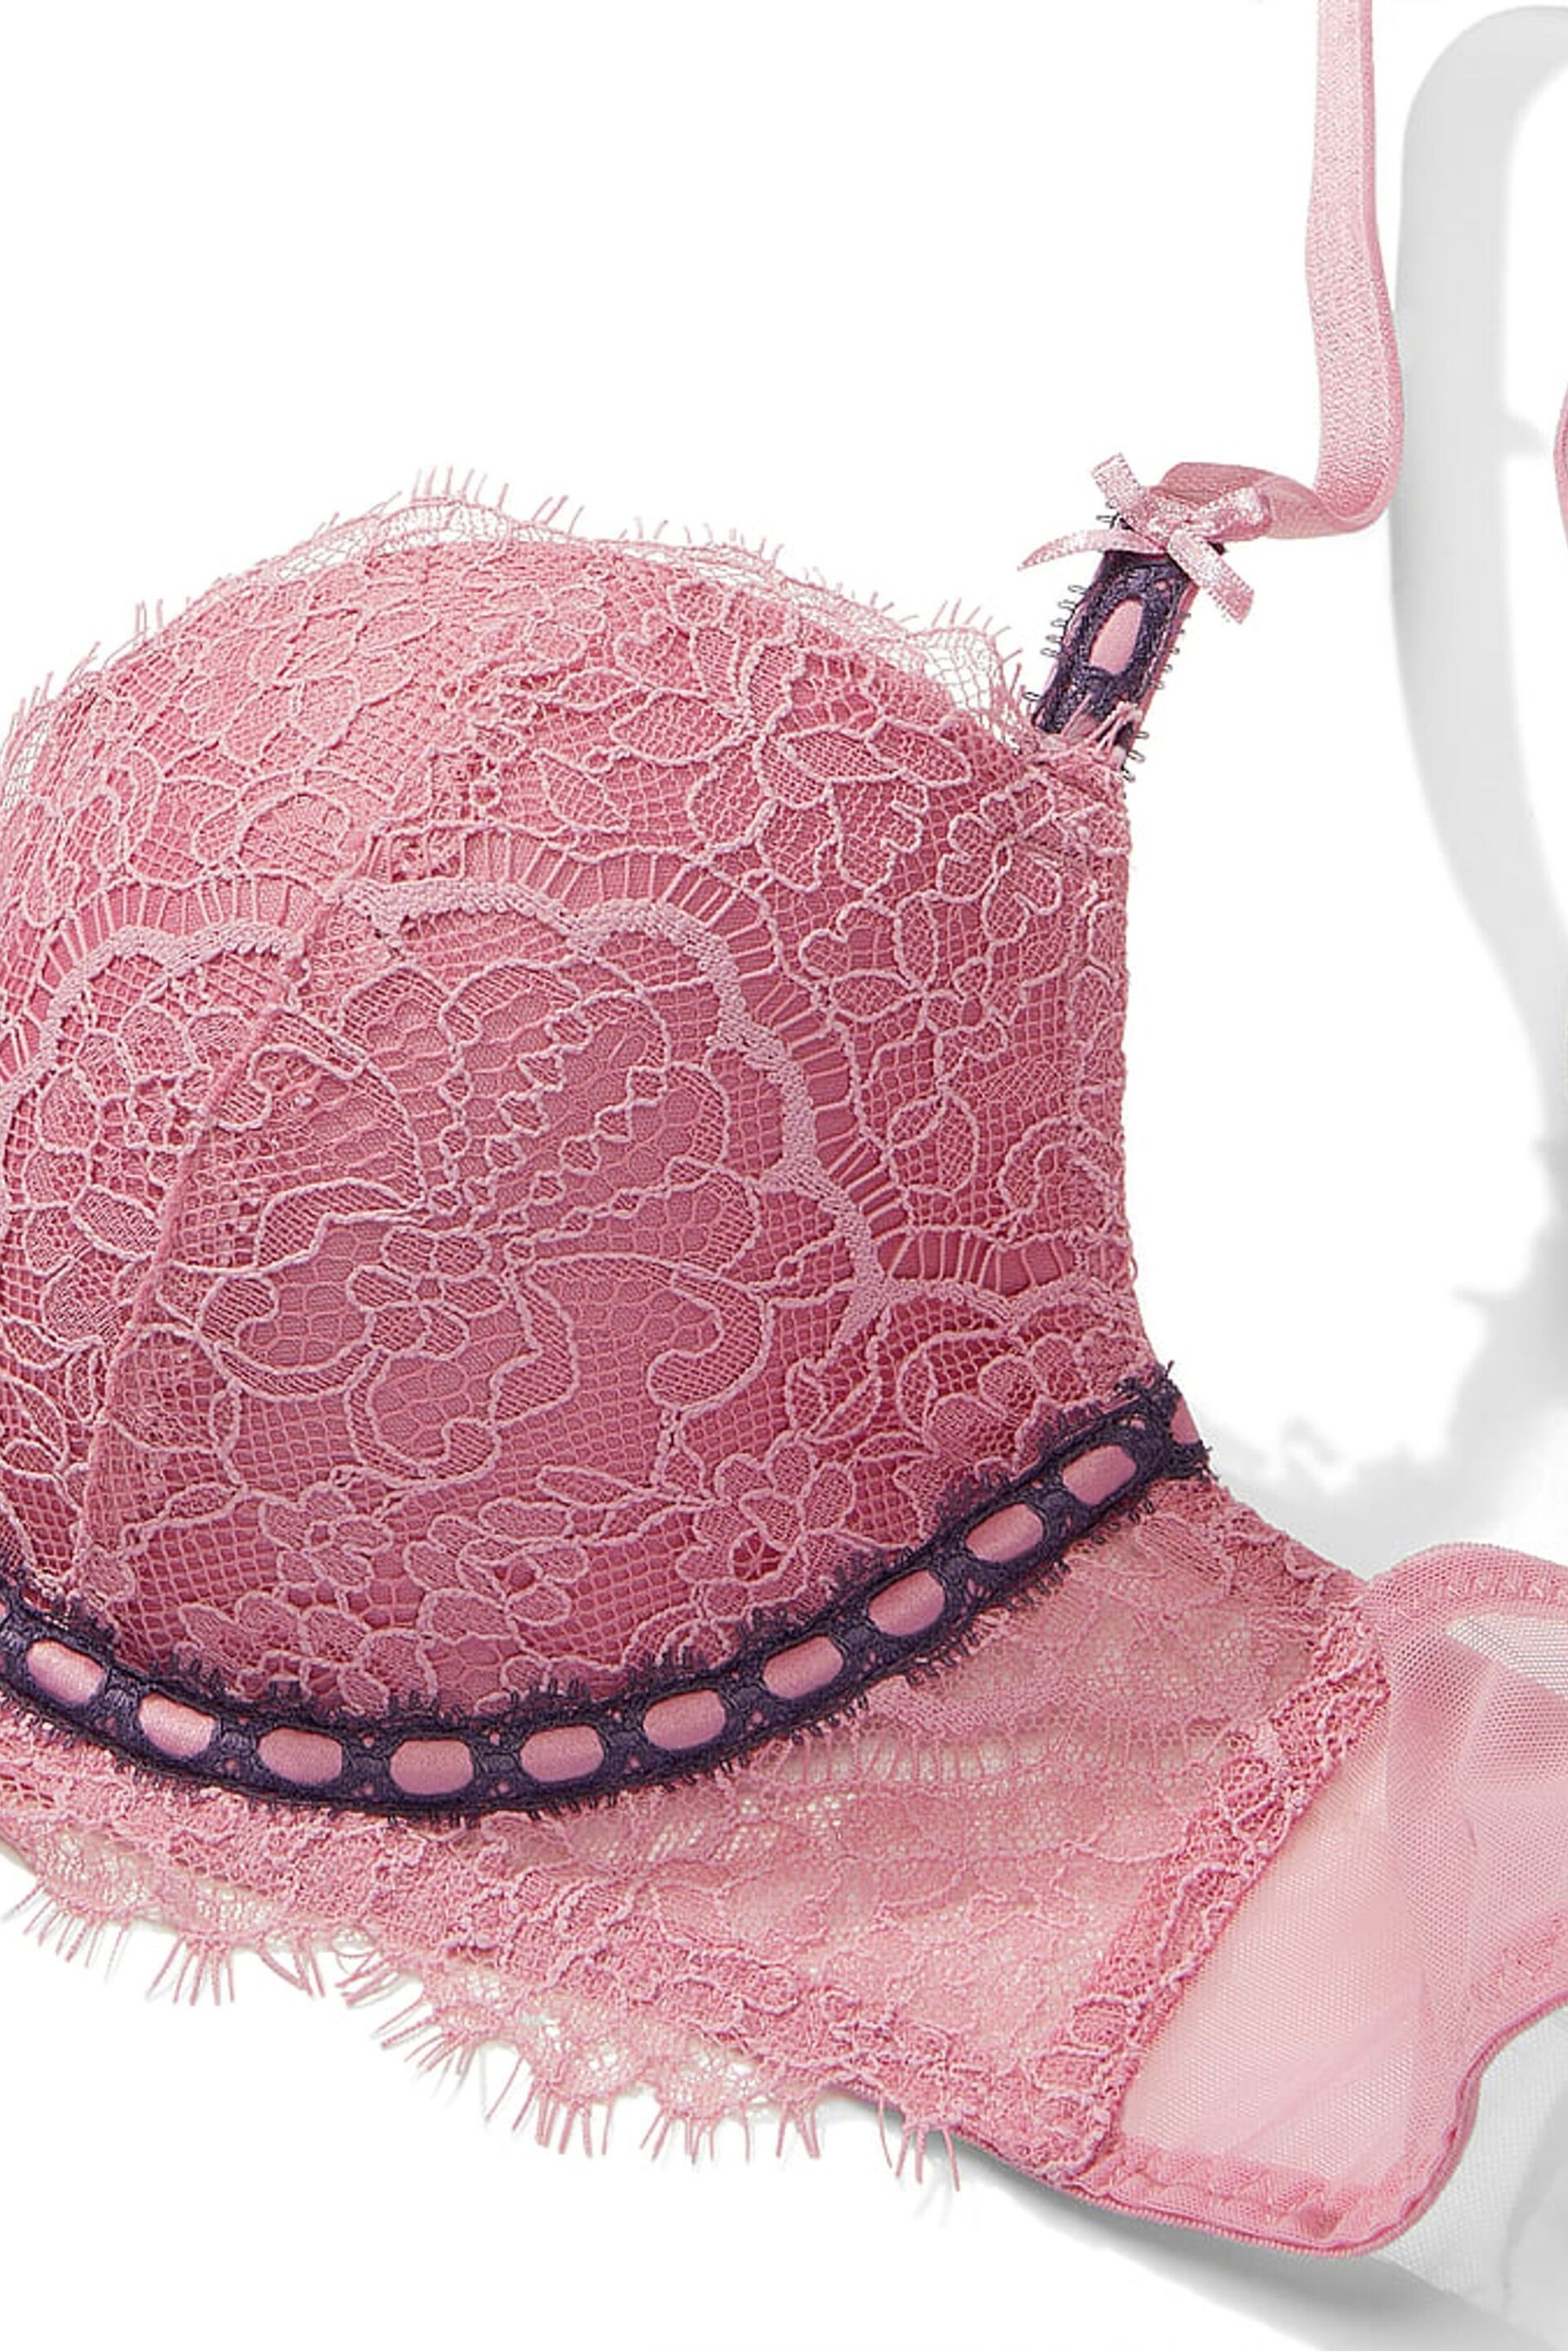 Victoria's Secret Dusk Mauve Pink Ribbon Slot Lightly Lined Demi Bra - Image 4 of 4